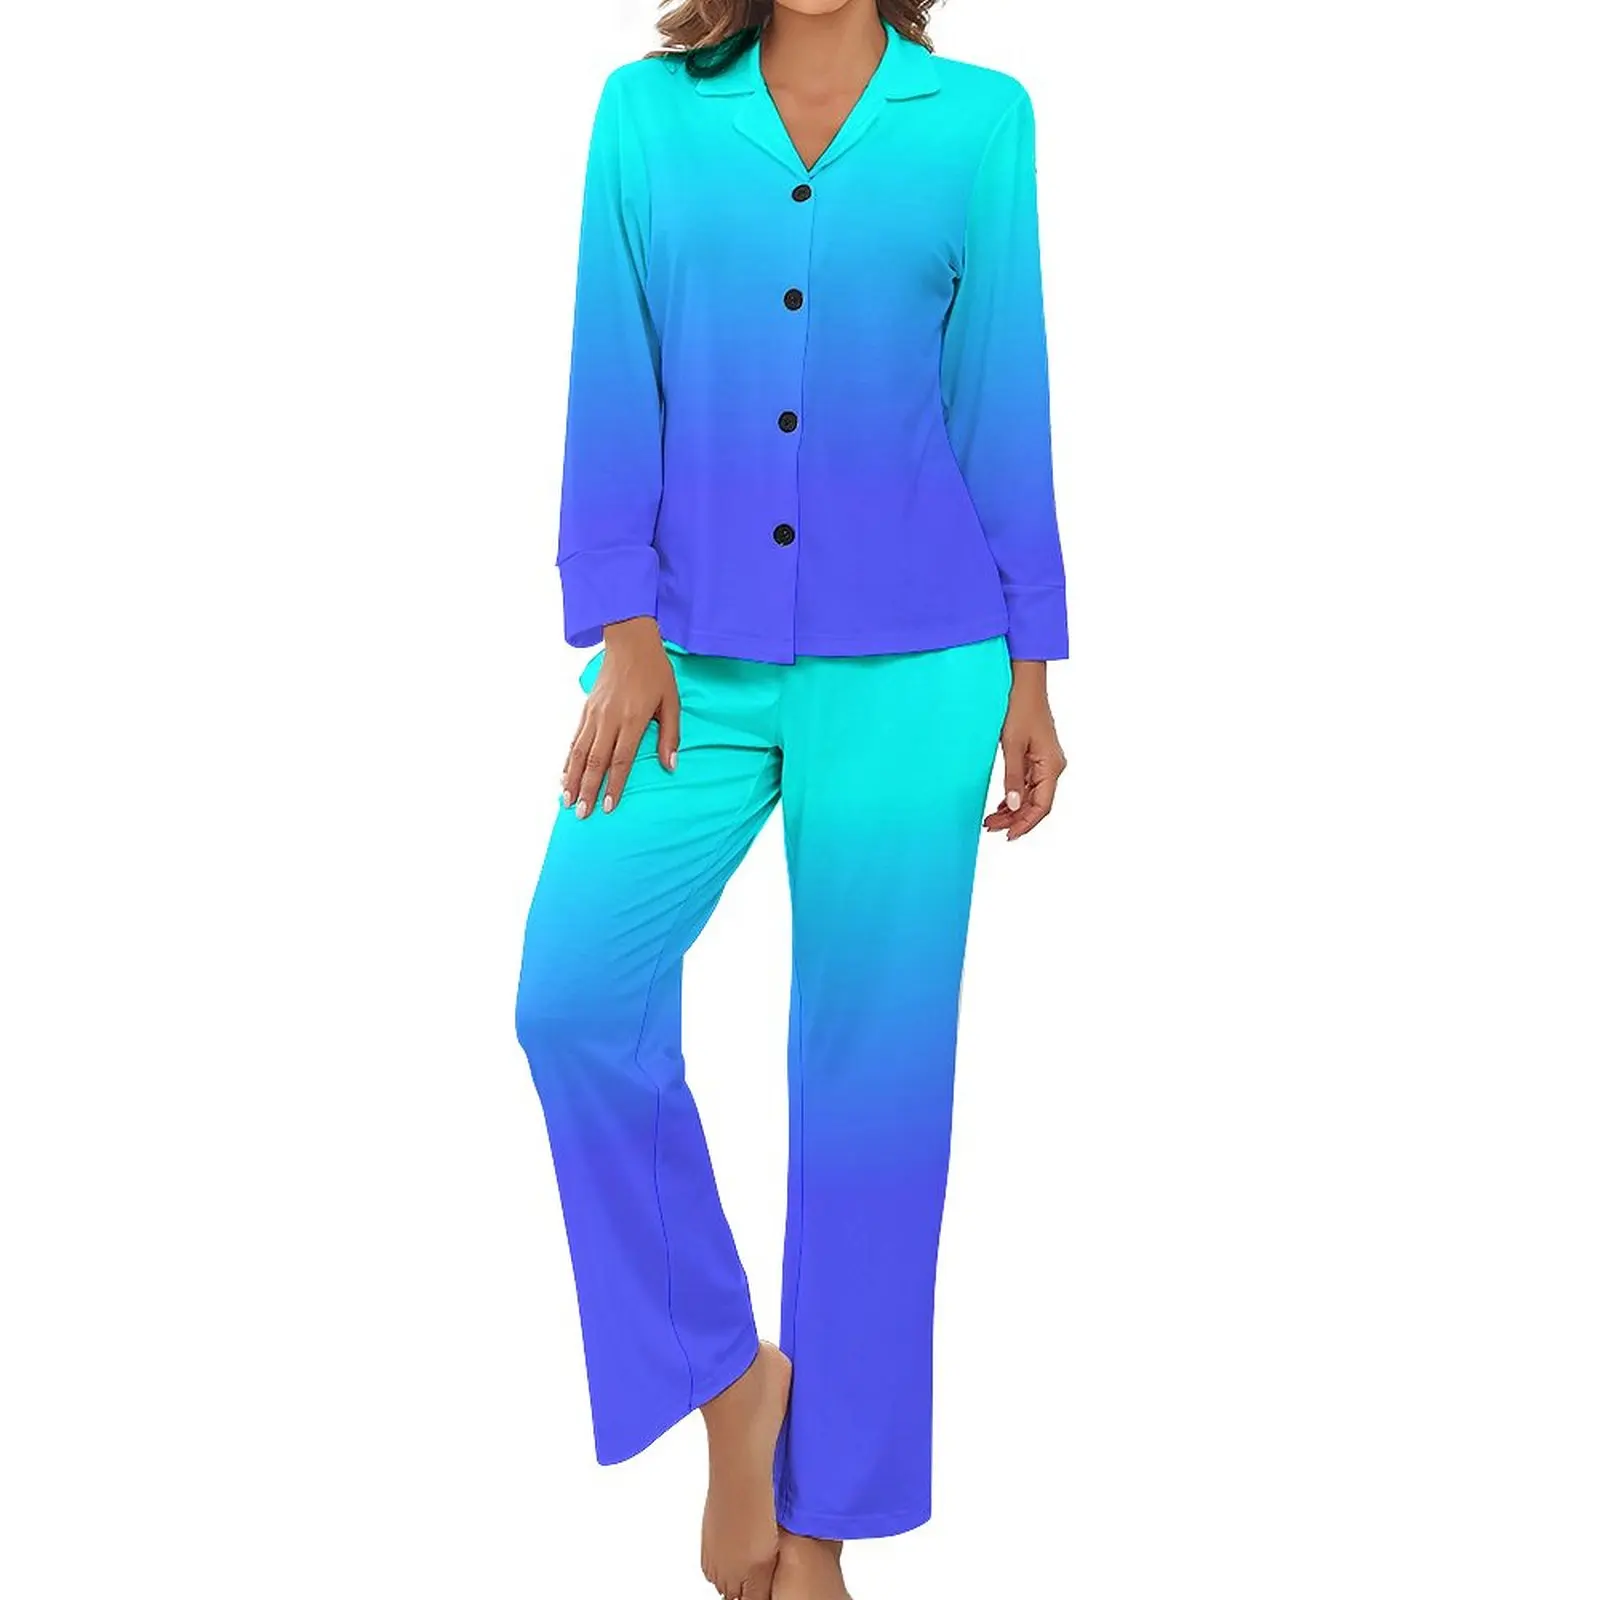 

Ombre Print Pajamas Long Sleeve Neon Blue 2 Pieces Bedroom Pajama Sets Daily Lady V Neck Cute Sleepwear